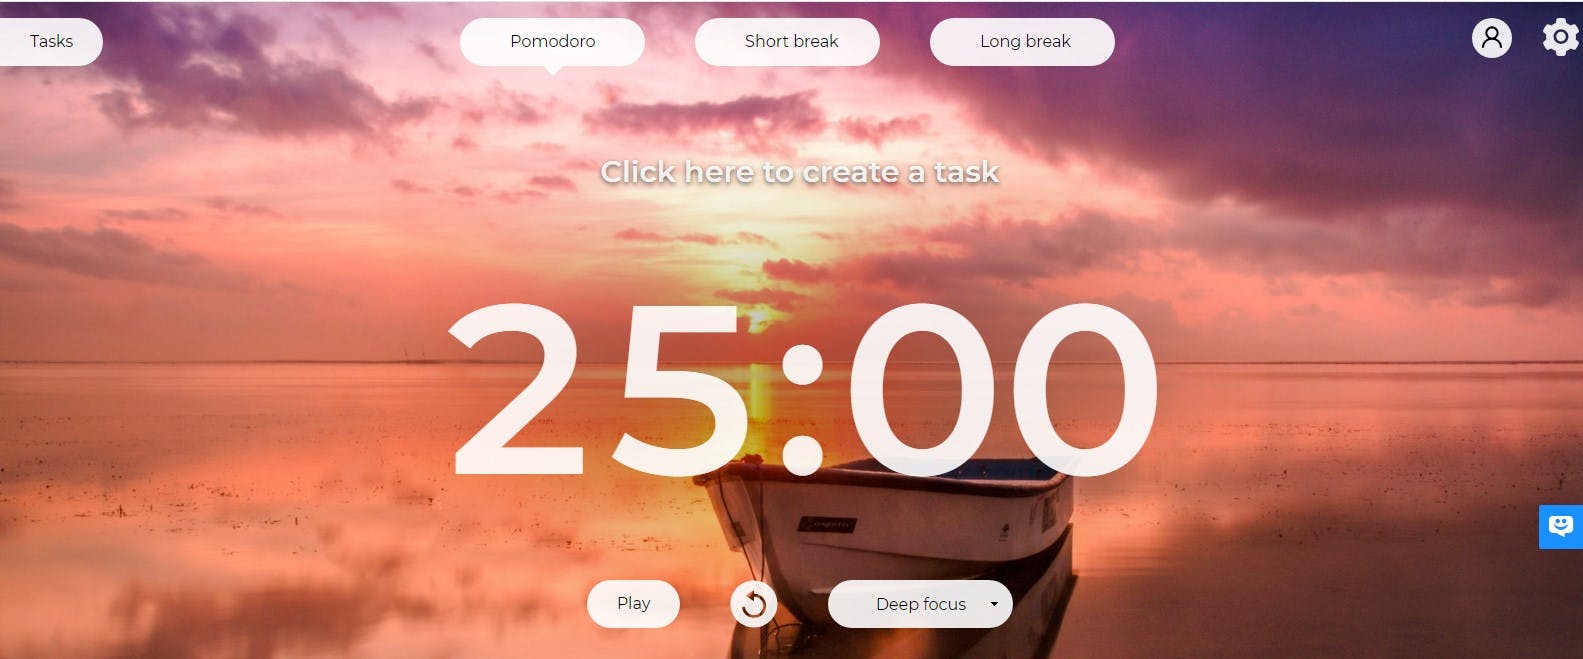 Customizable Pomodoro timer with background noise options including LoFi music.